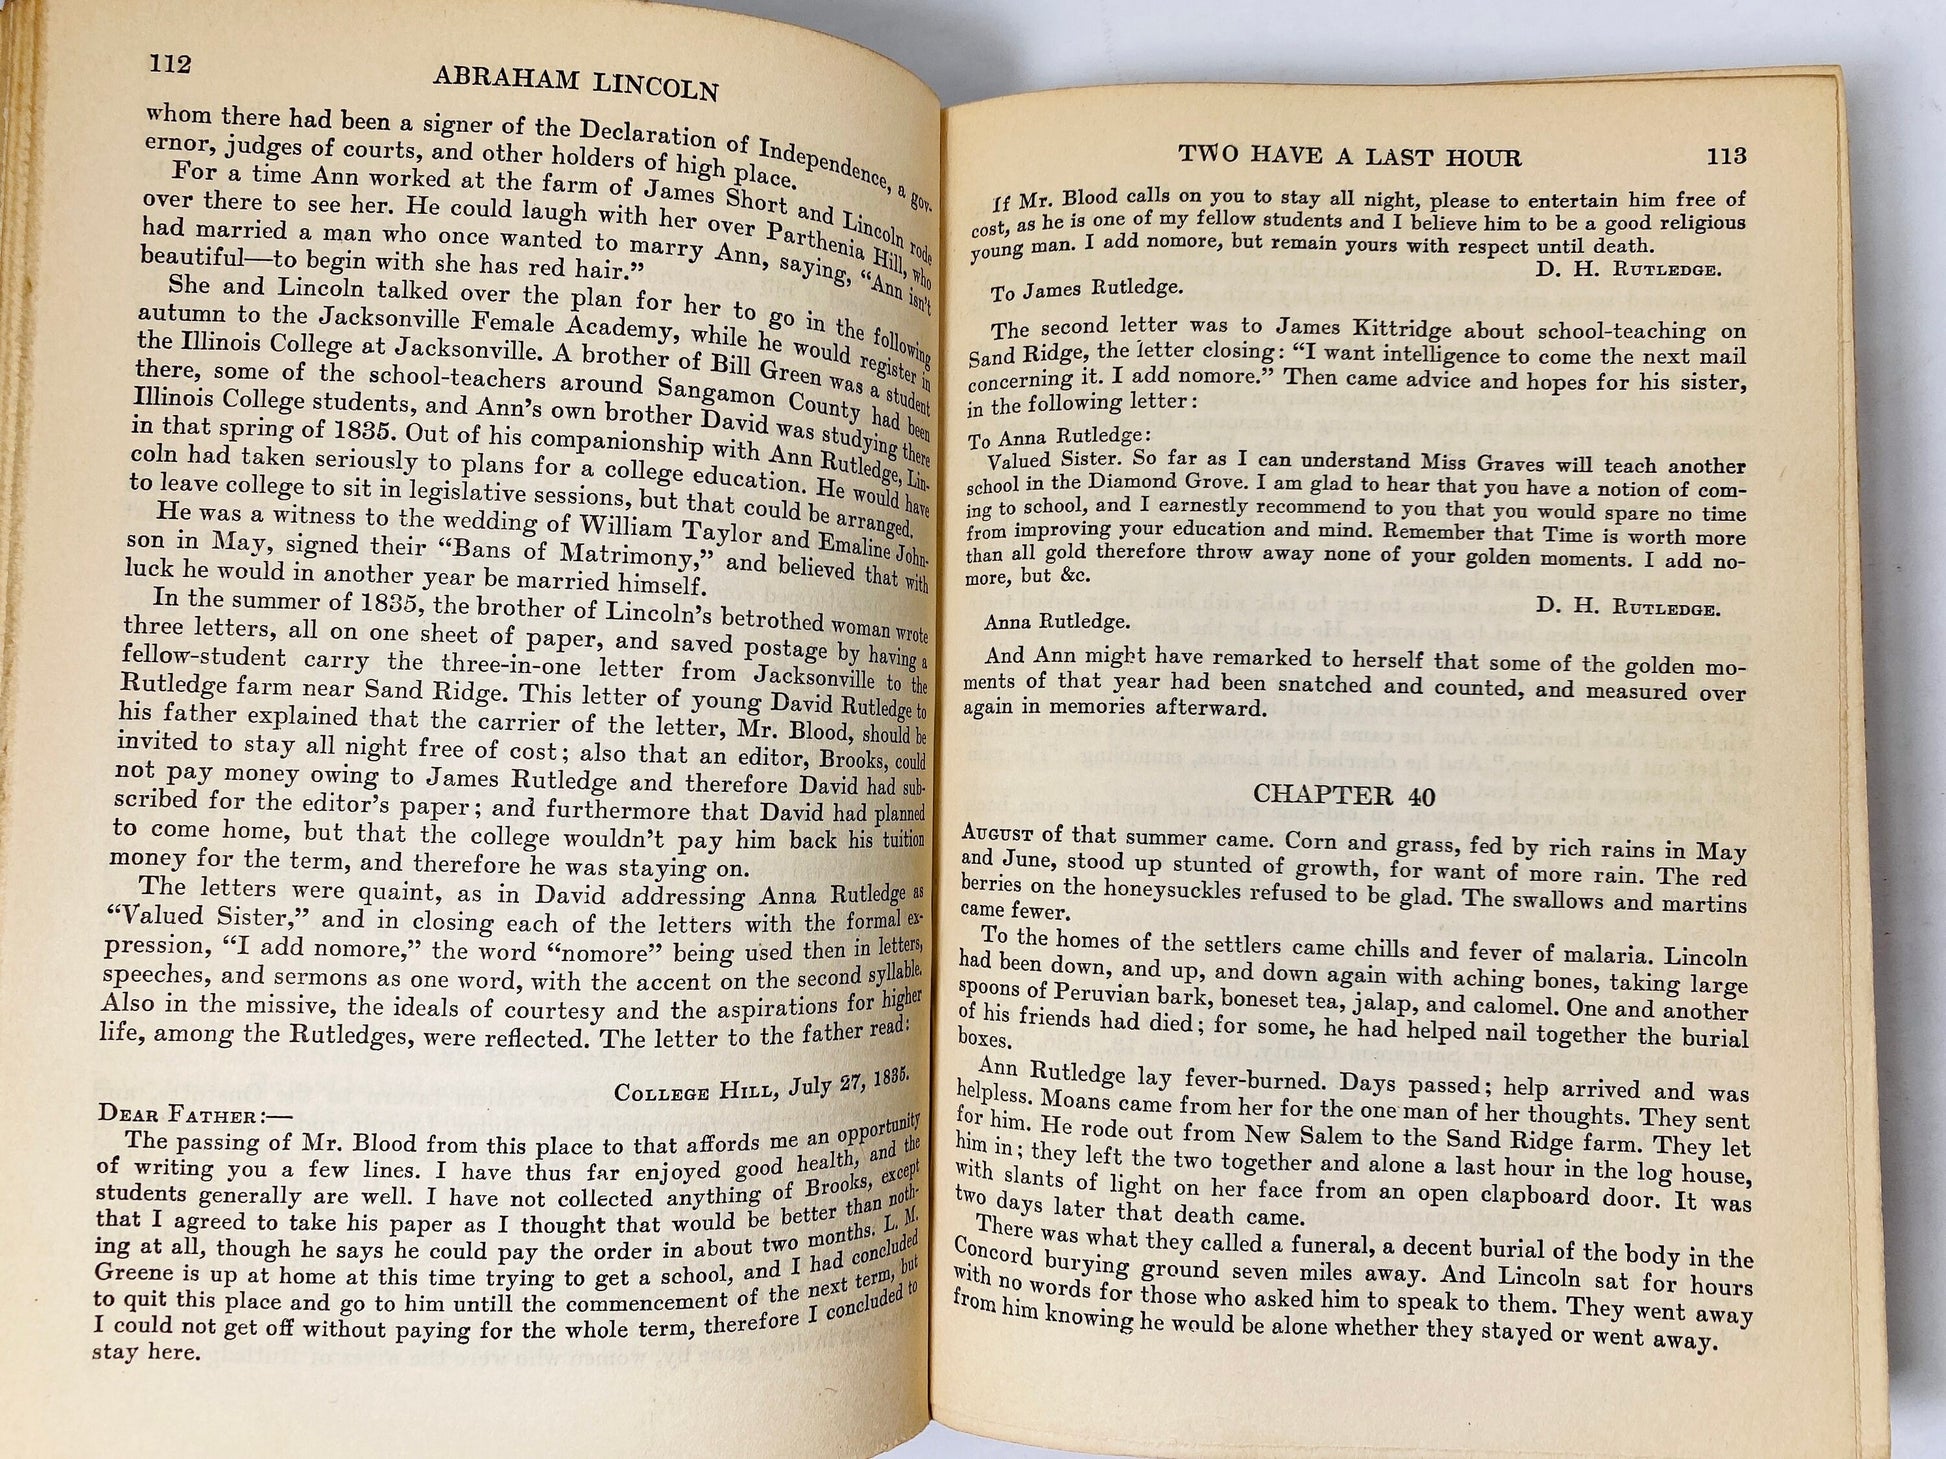 1926 Abraham Lincoln by Carl Sandburg Prairie Years and the War Years Beautiful green vintage FIRST EDITION book Civil War